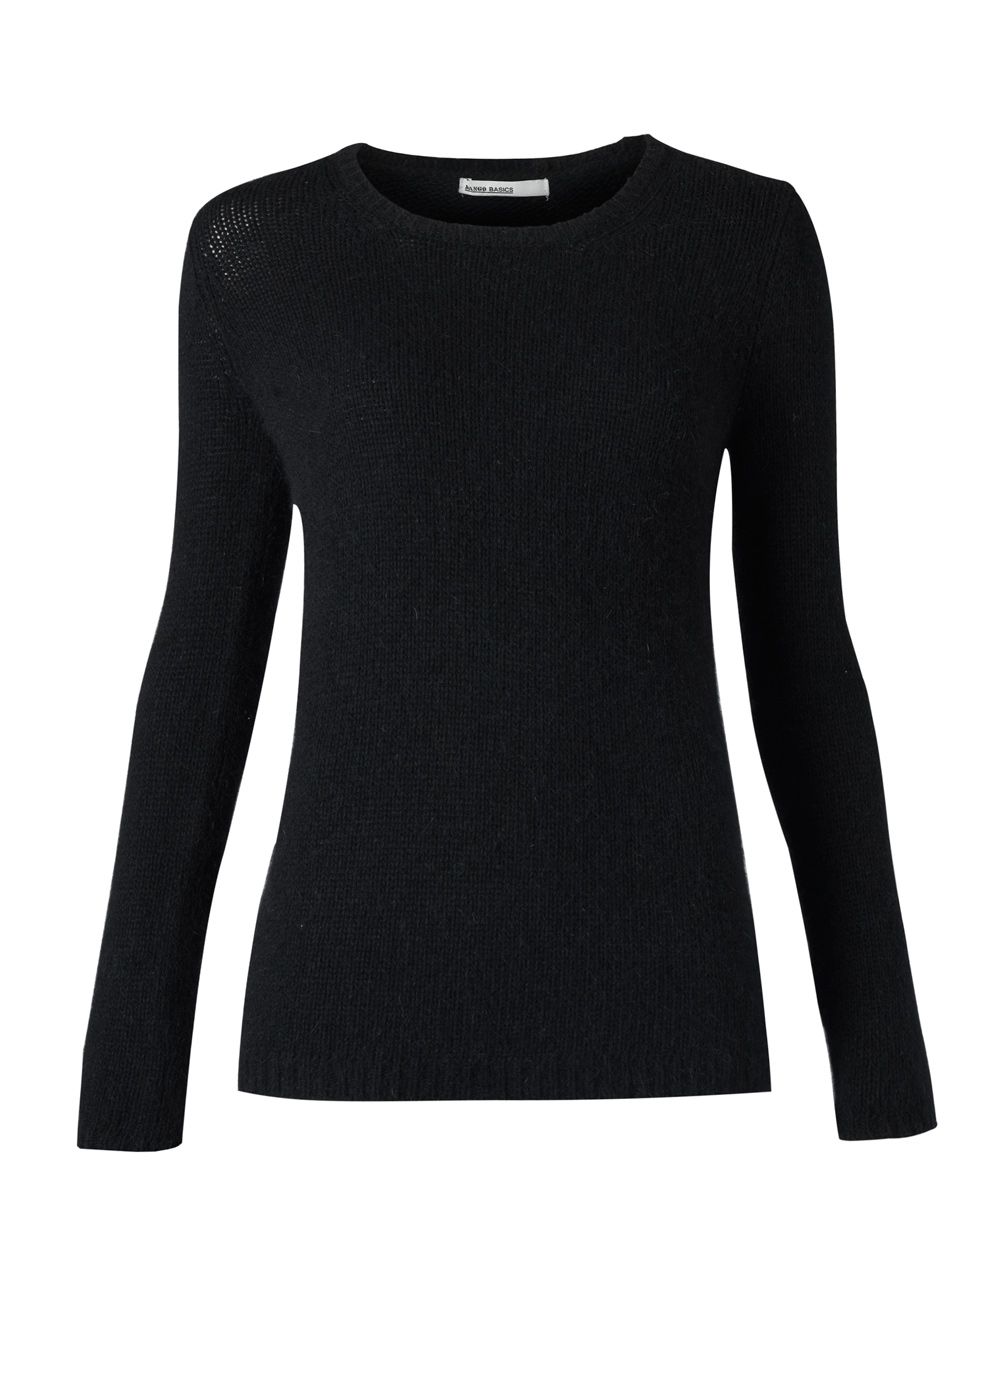 Mango Back Zipper Sweater in Black | Lyst